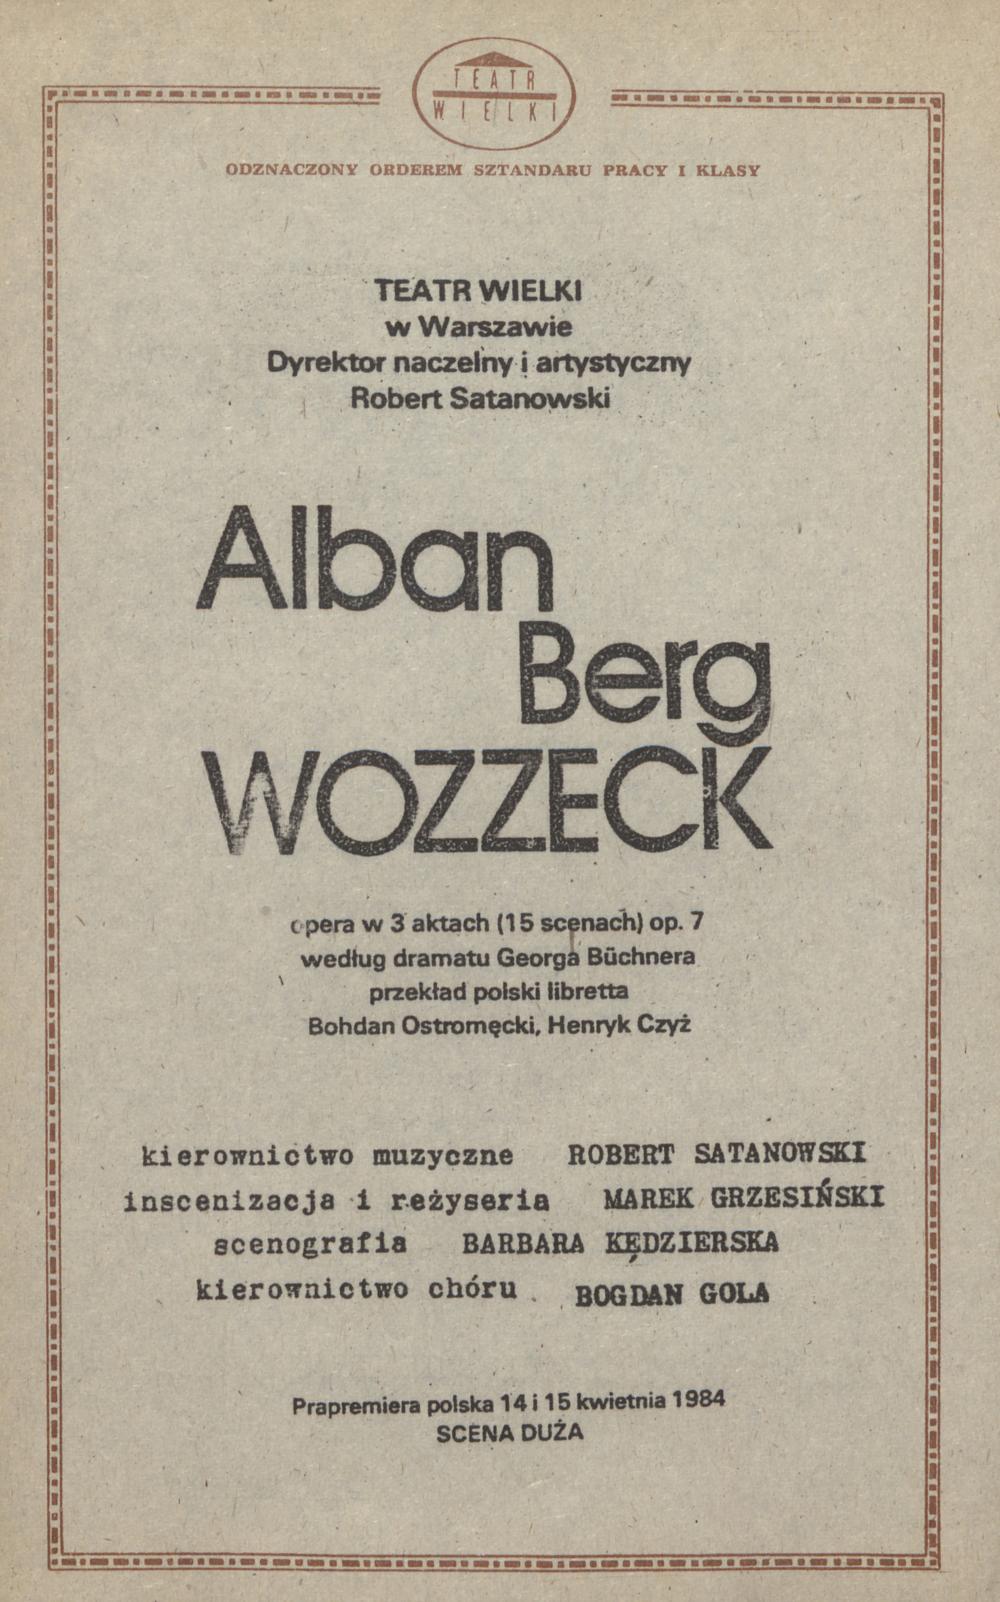 Wkładka obsadowa „Wozzeck” Alban Berg 26-04-1985